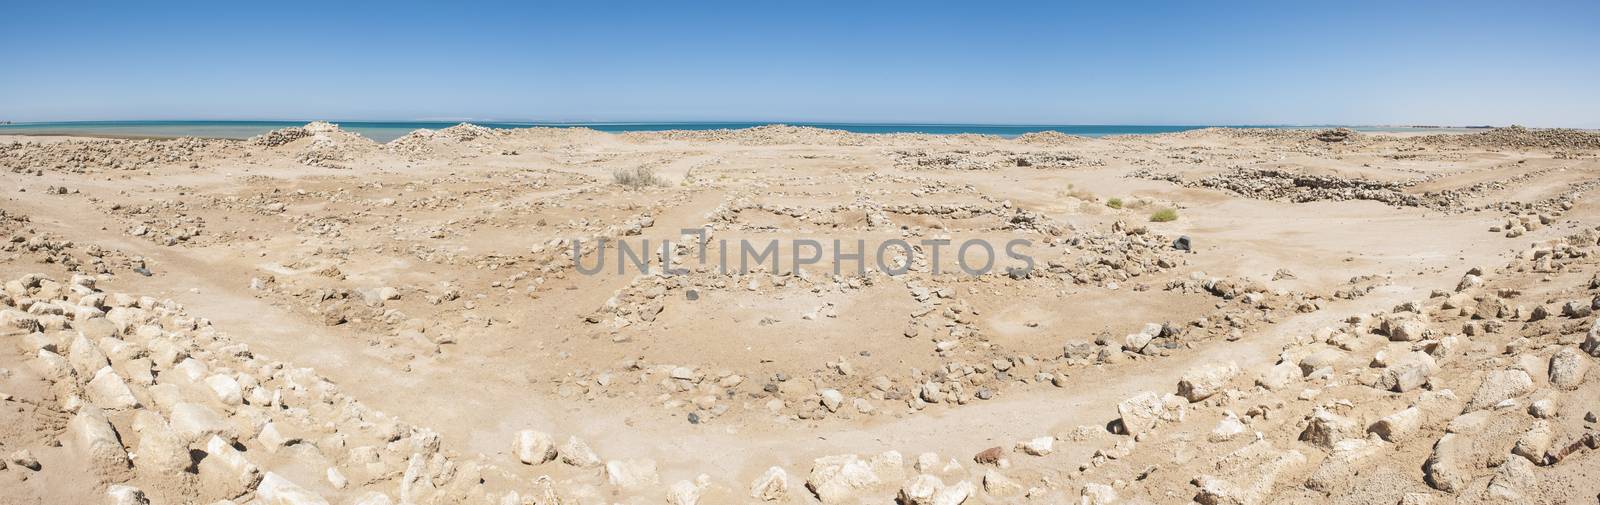 Old roman ruins on desert coastline by paulvinten